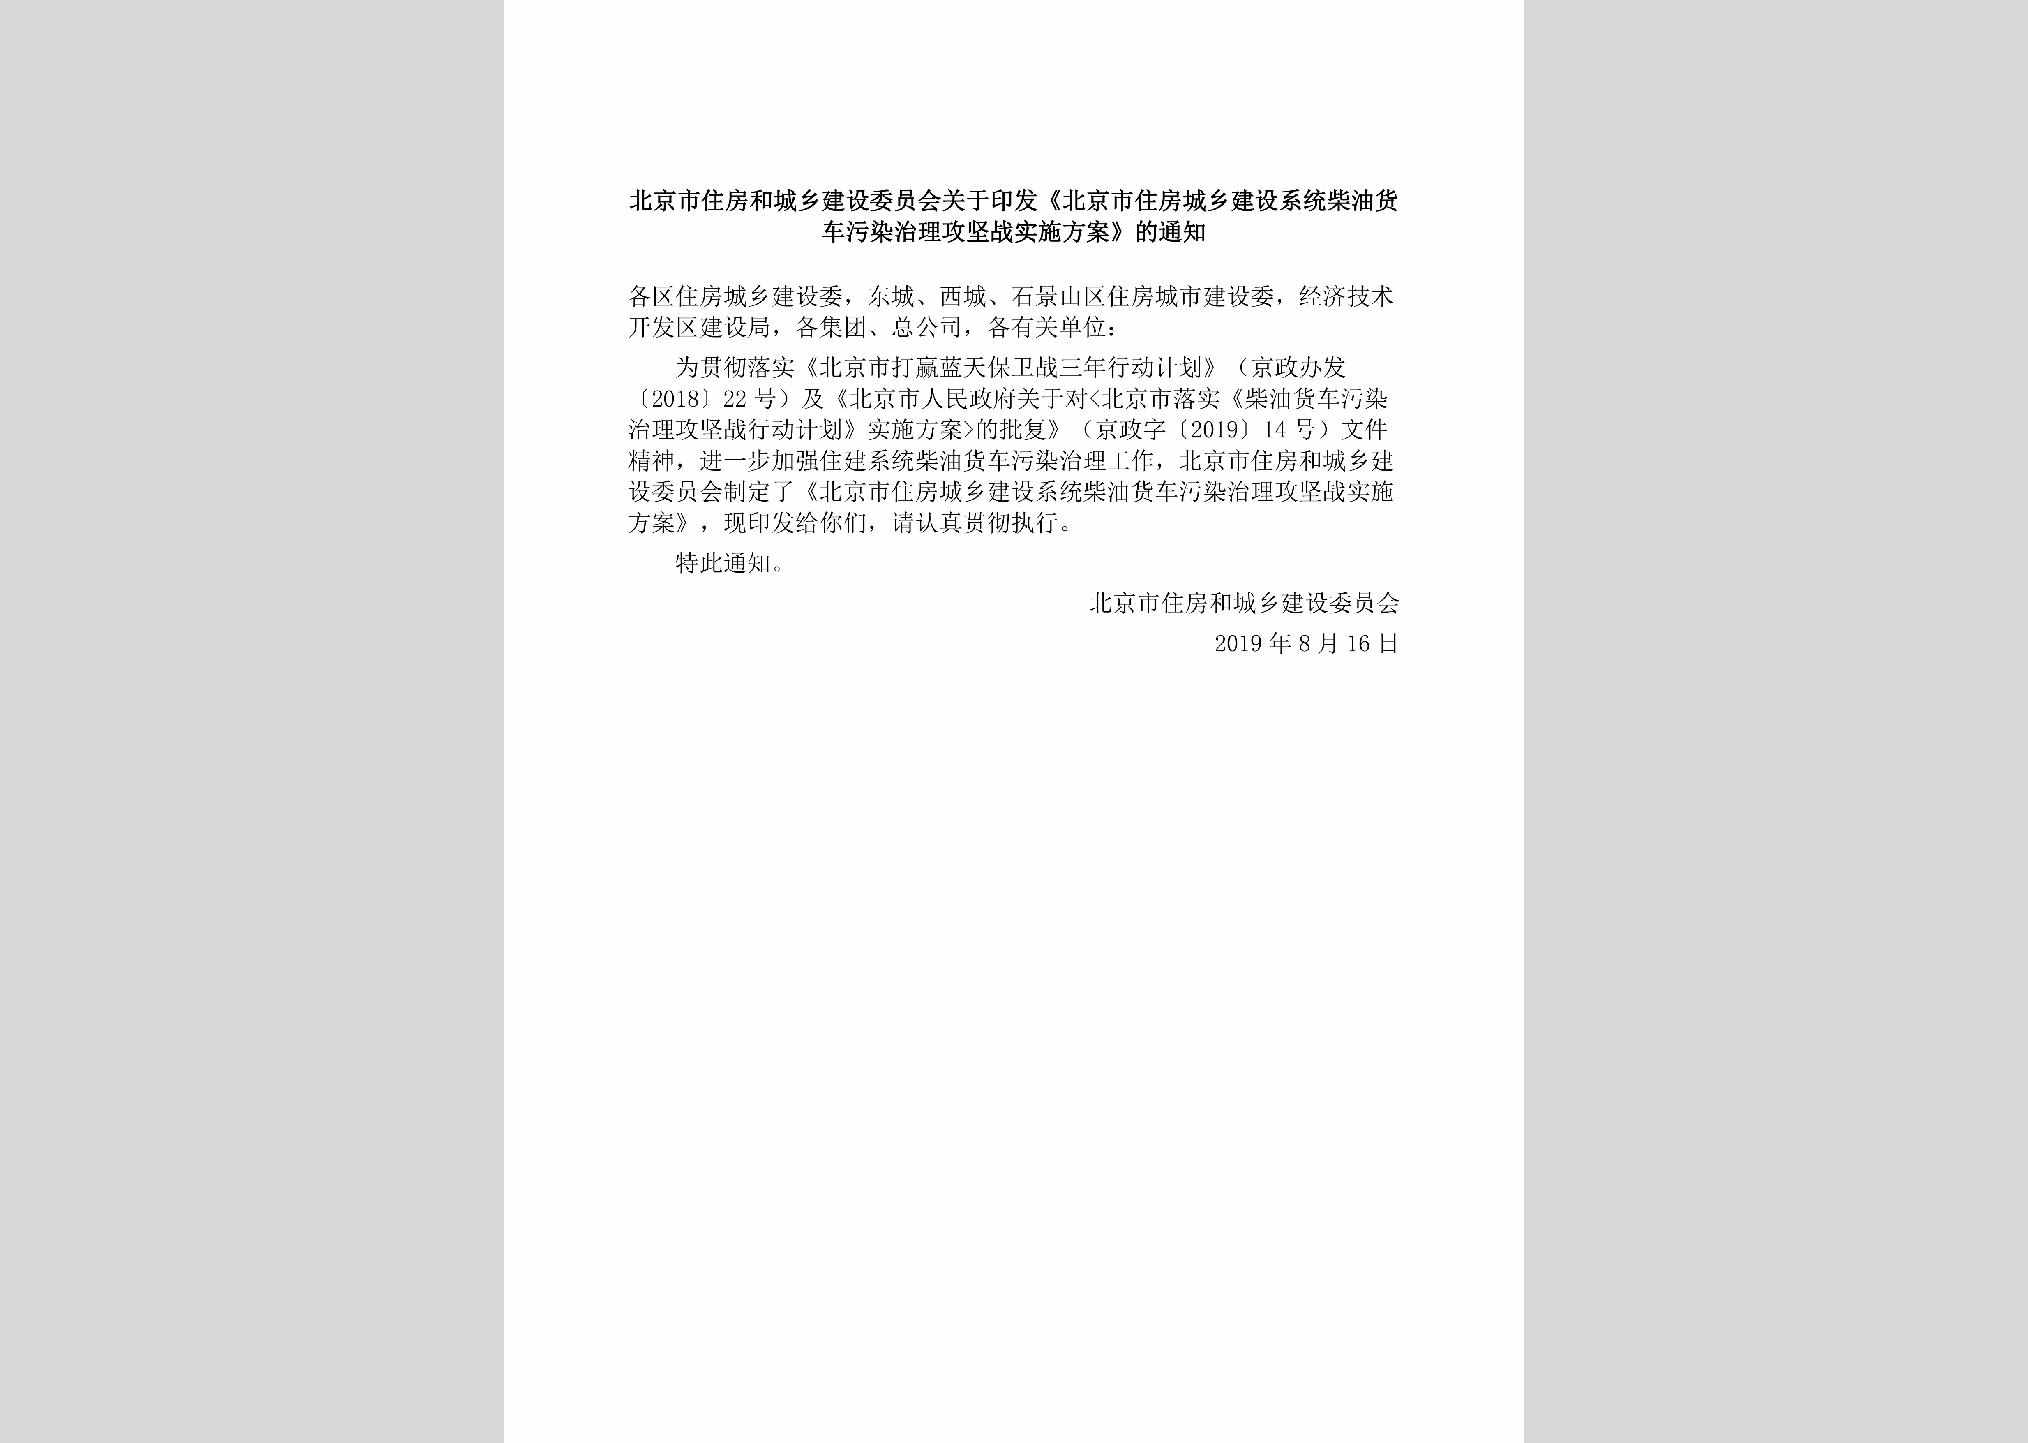 BJ-CYHCWRZL-2019：北京市住房和城乡建设委员会关于印发《北京市住房城乡建设系统柴油货车污染治理攻坚战实施方案》的通知